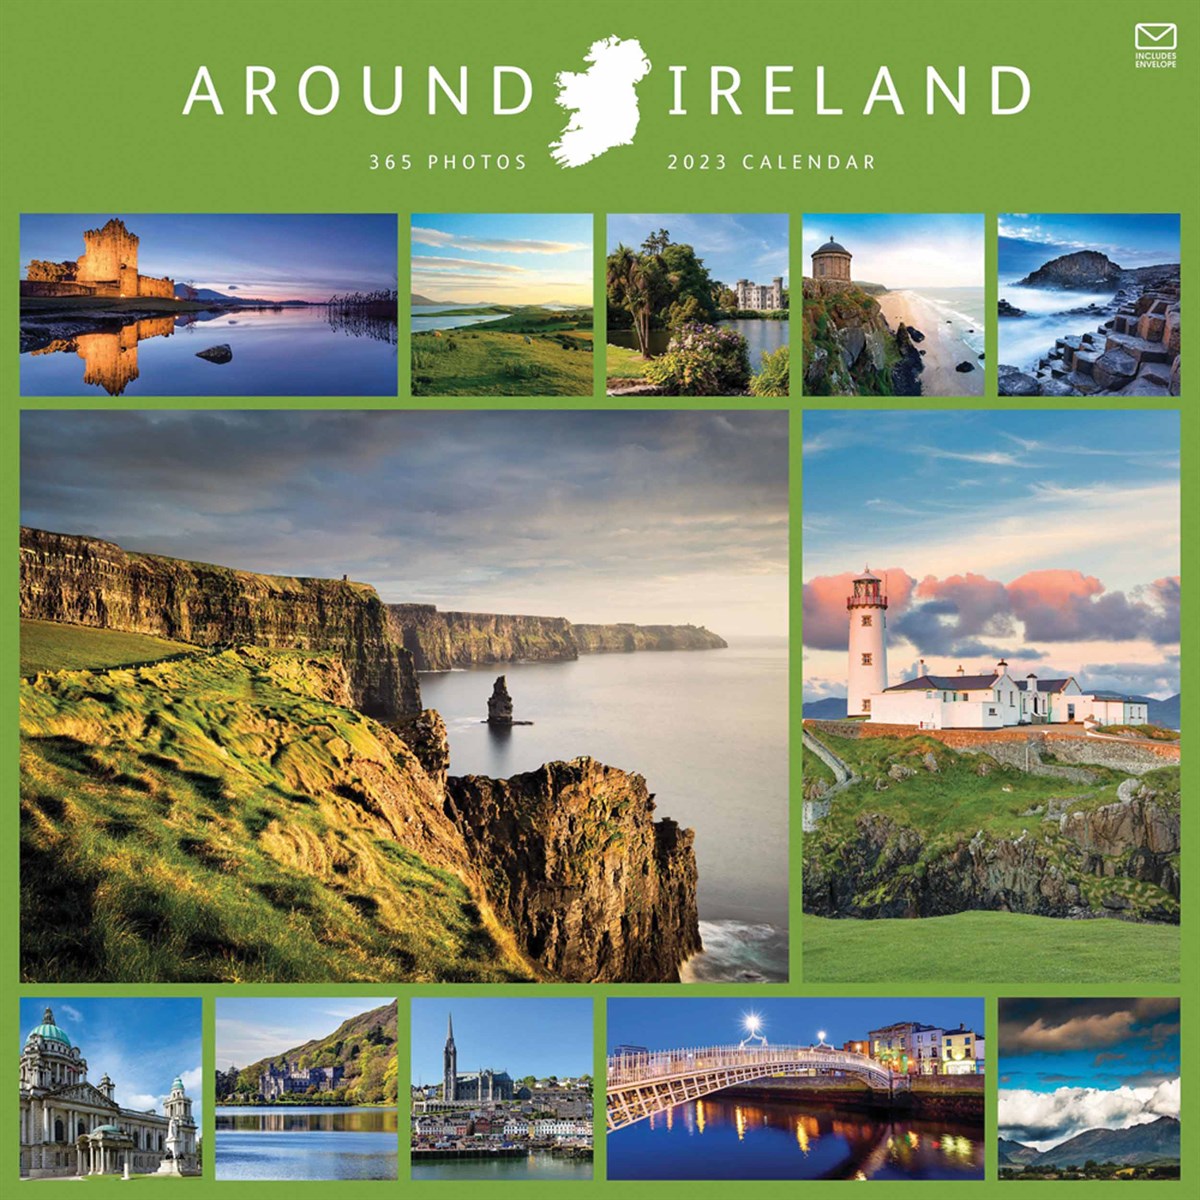 Around Ireland 2023 Calendars